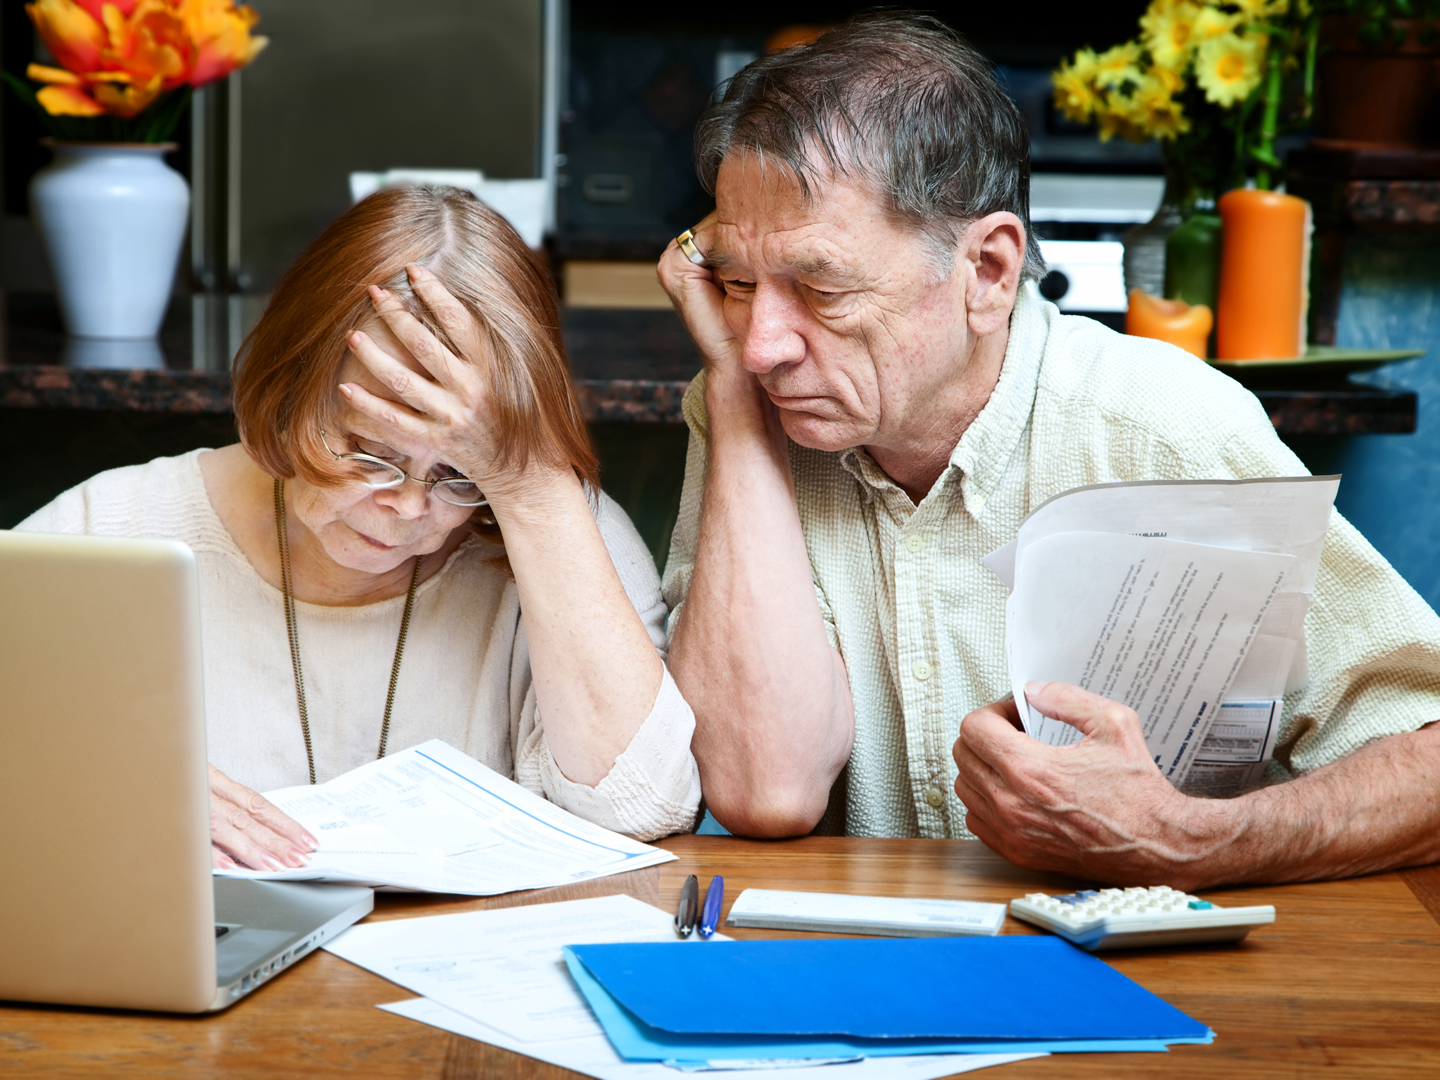 Senior couple at home reacting to many bills